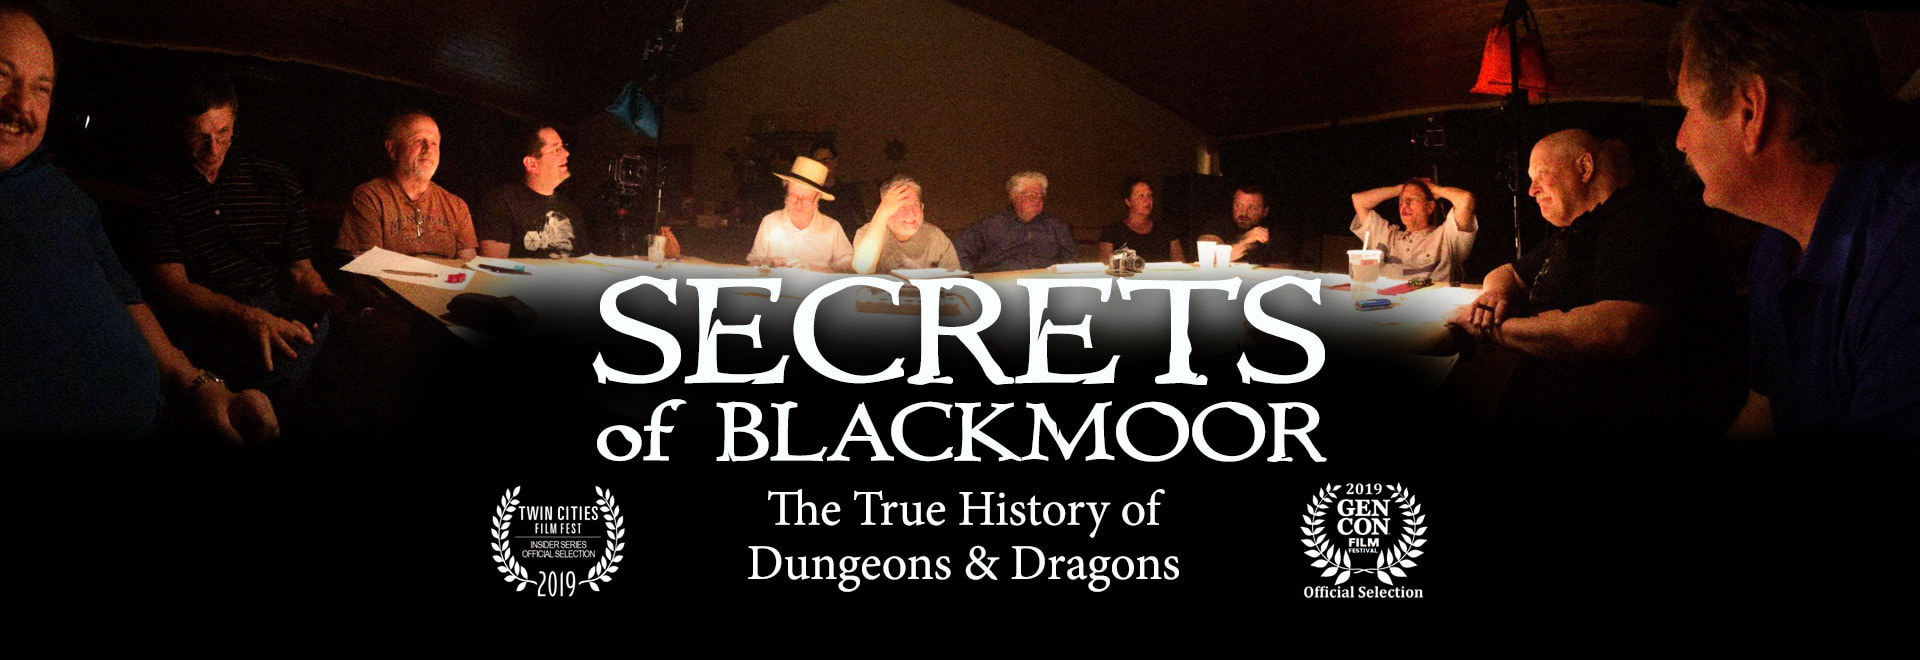 www.secretsofblackmoor.com